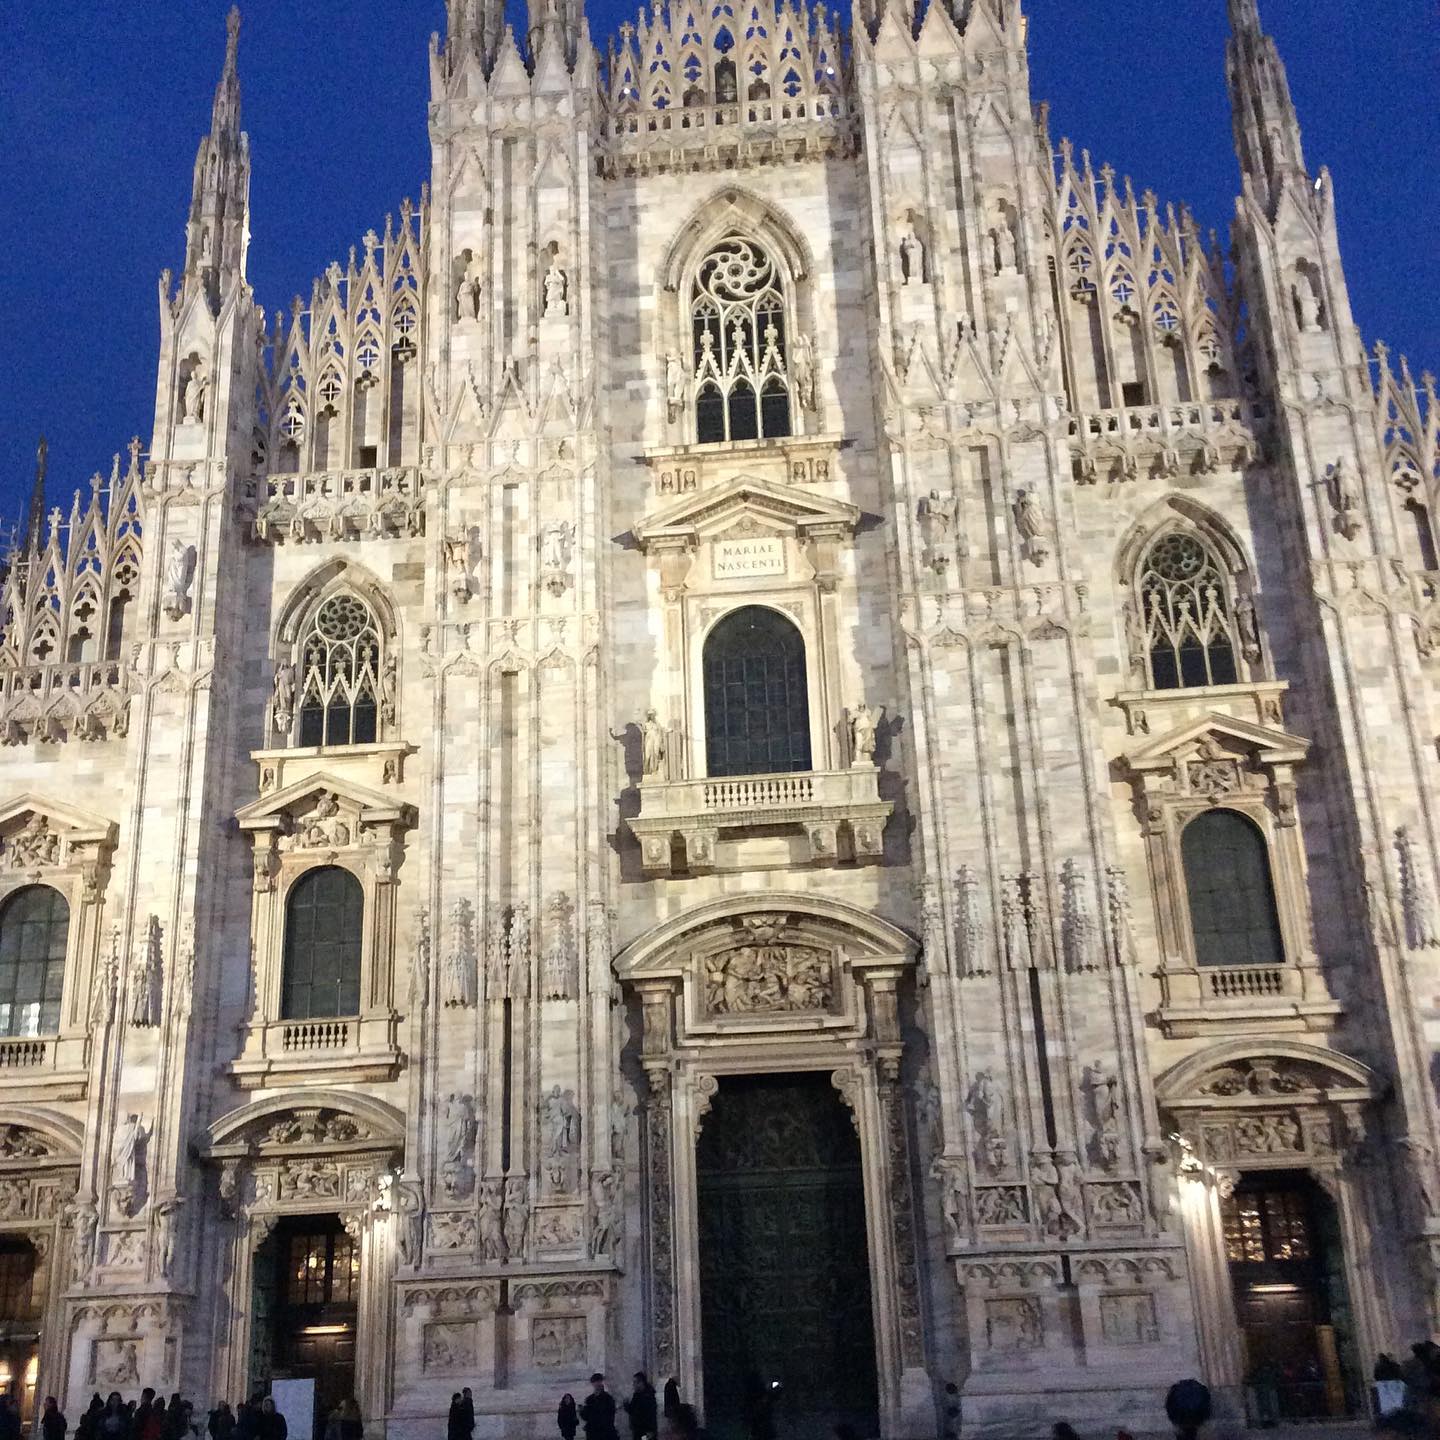 Duomo di Milano. A spectacular cathedral .
.
.
.
.
#milan #milano #duomo #duomomilano #cathedral #art #architecture